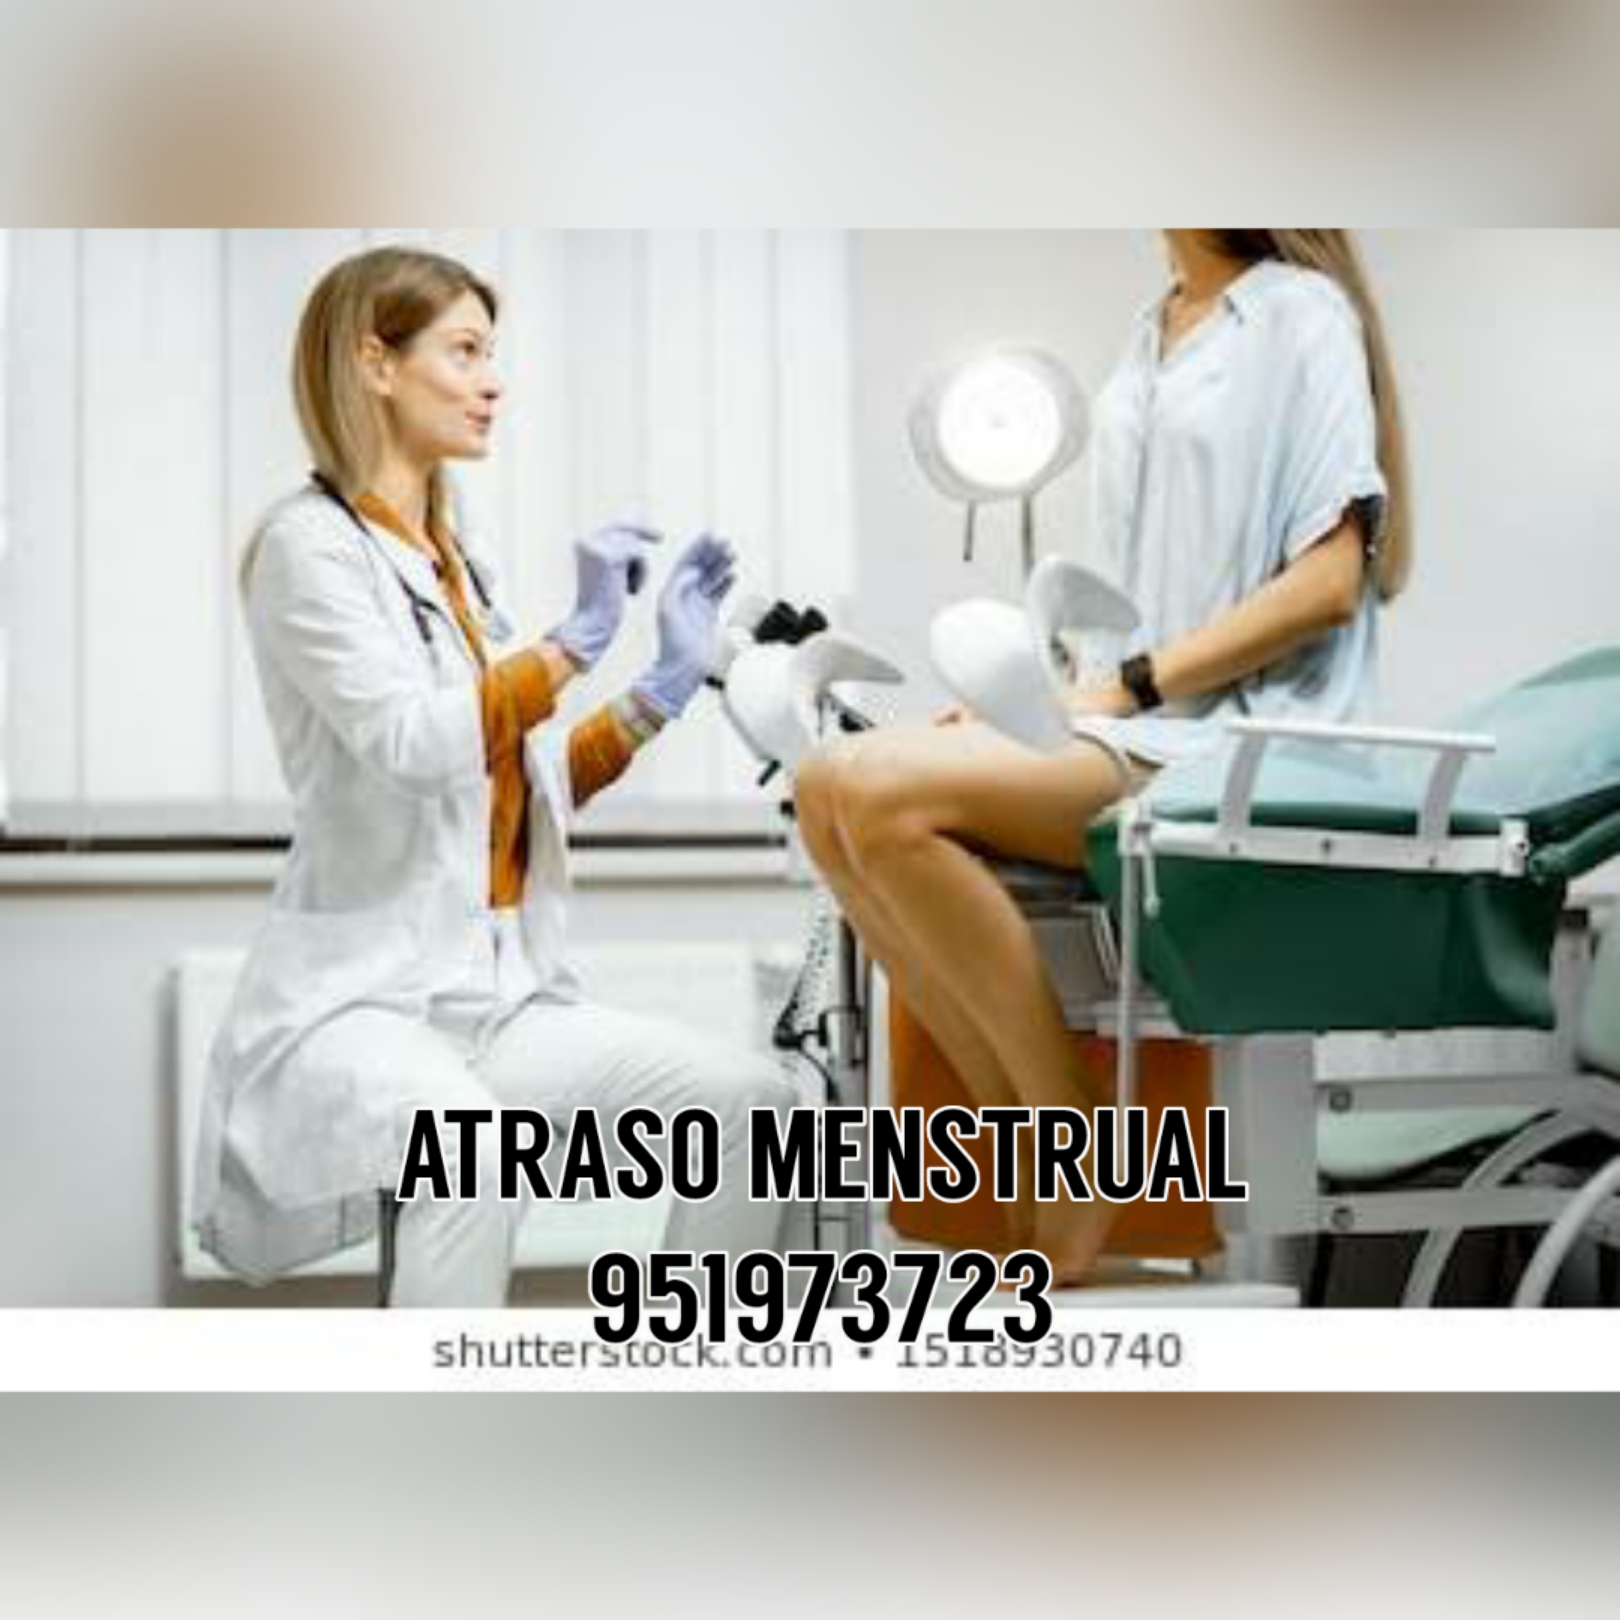 Atraso Menstrual 951973723 HUANCAYO Clínica Garantizada